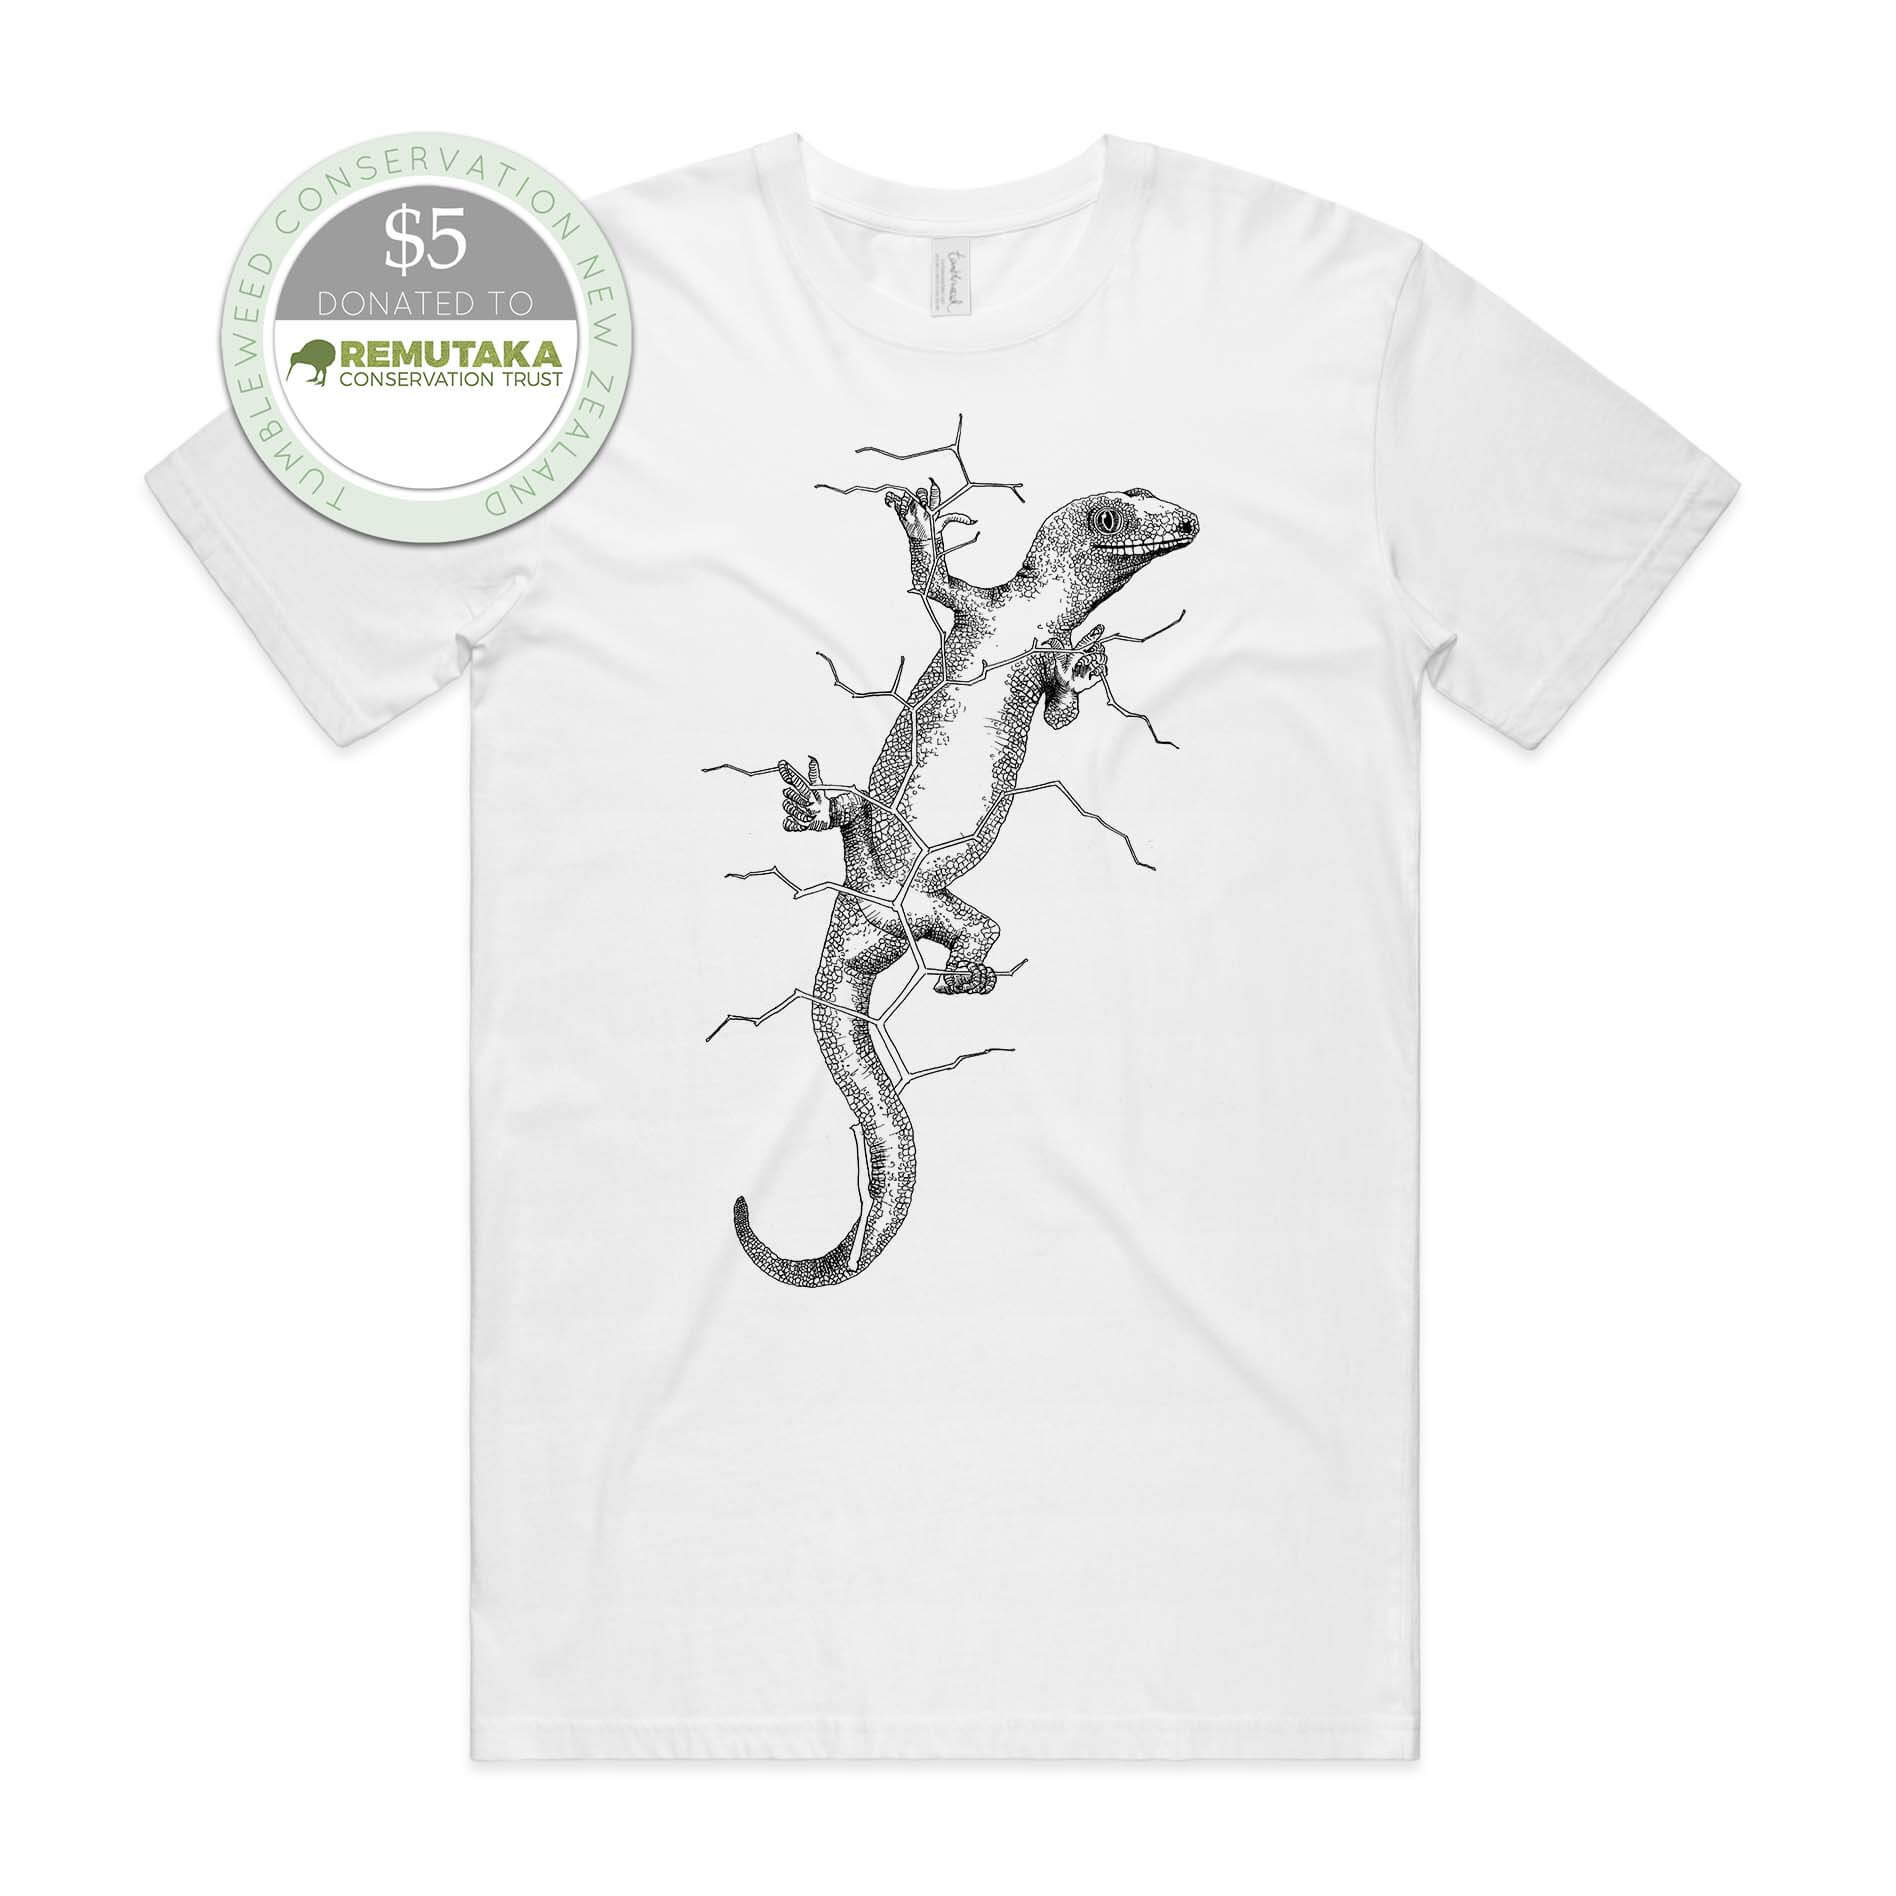 Grey marle, female t-shirt featuring a screen printed gecko design.